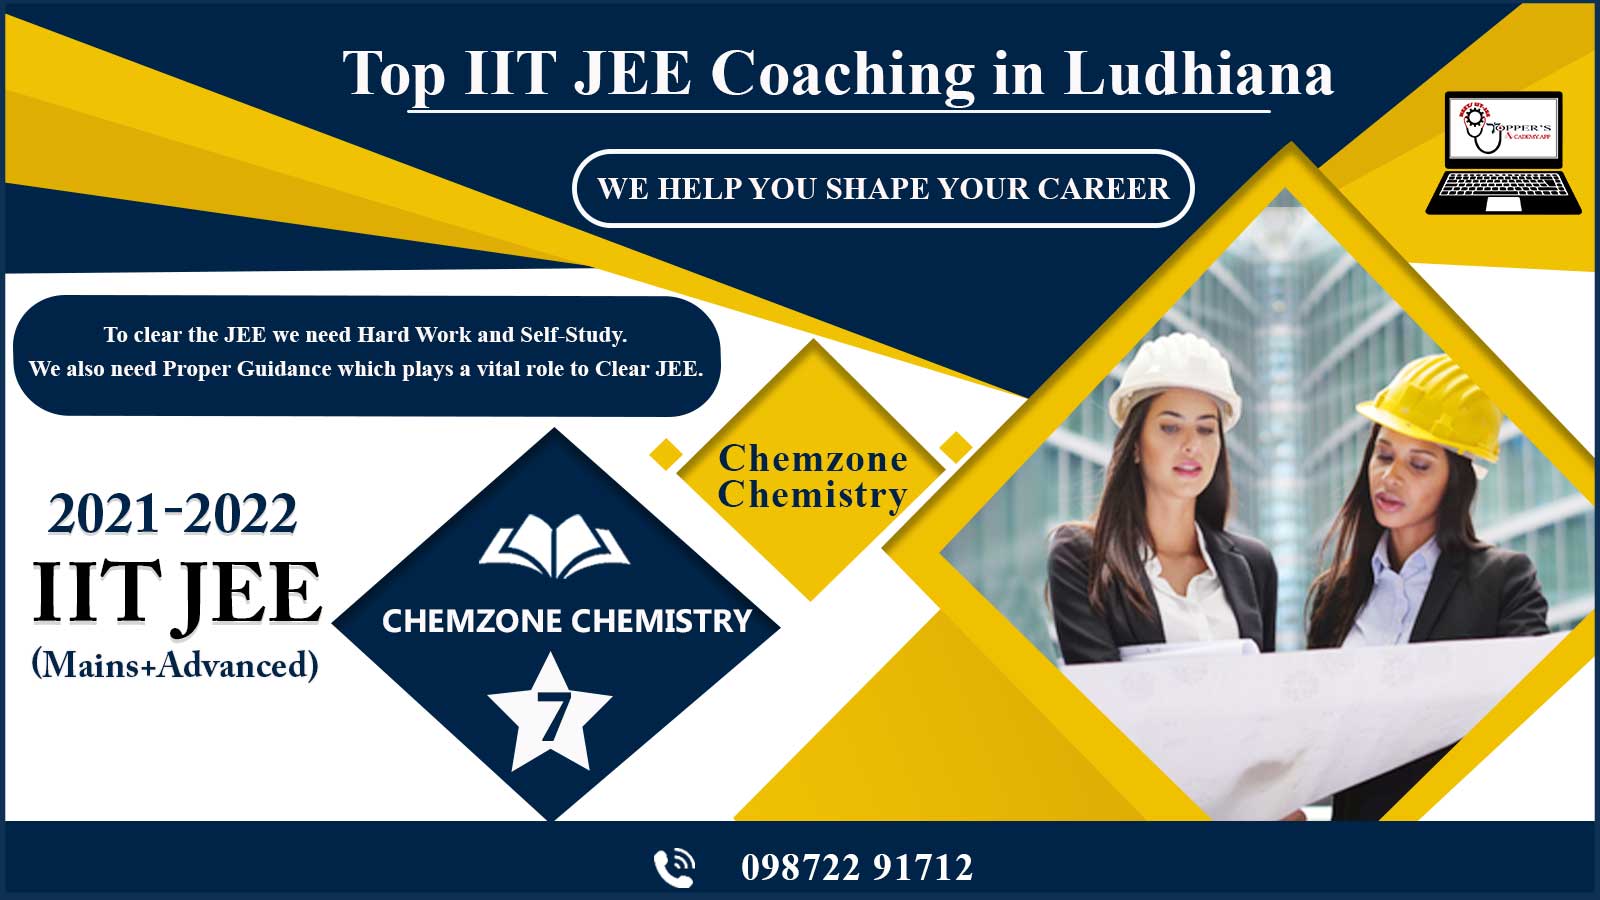 Chemzone Chemistry Classes in Ludhiana